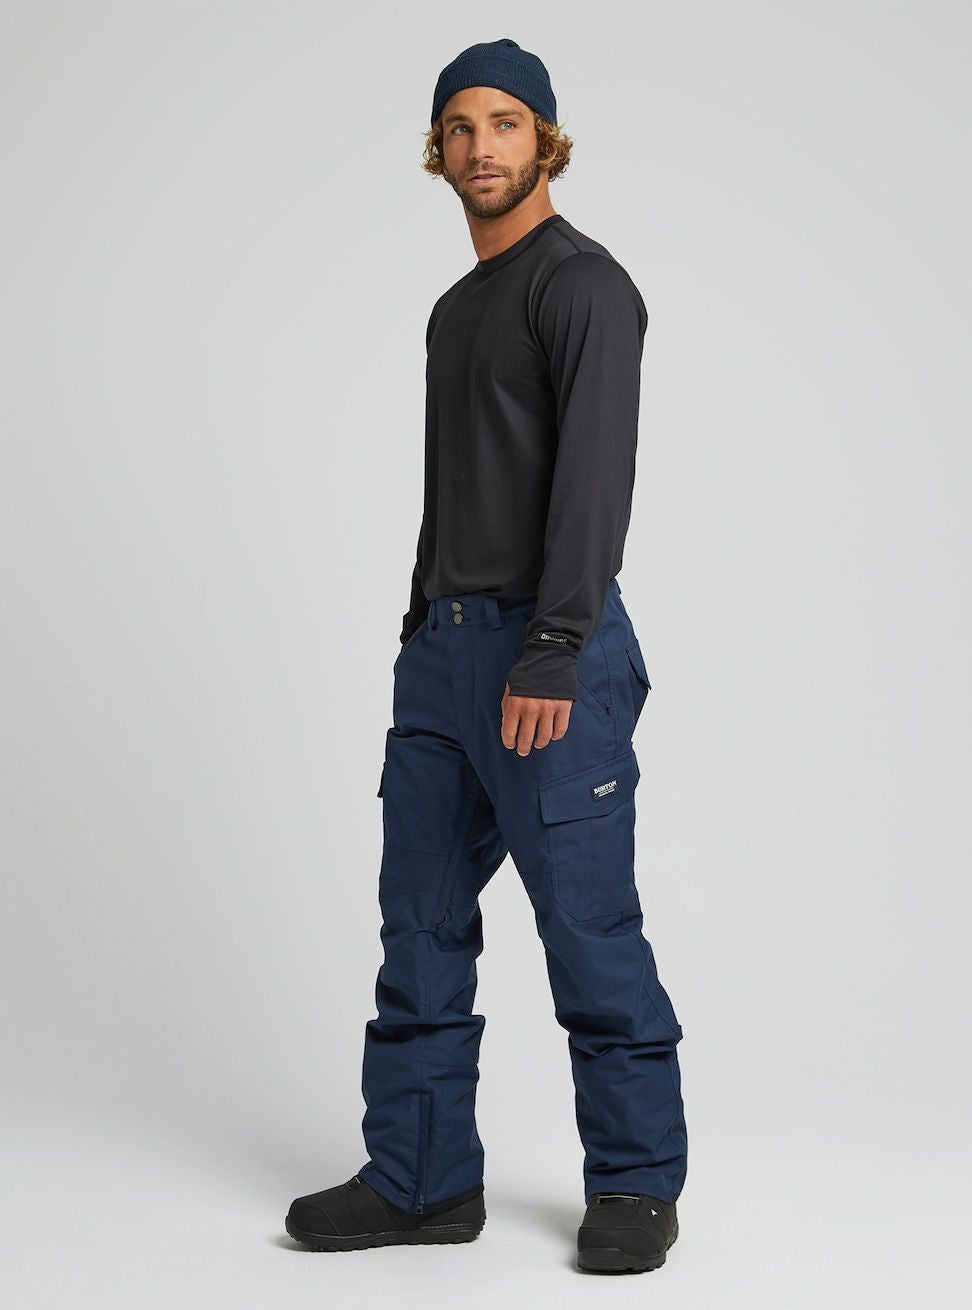 Men's Burton Cargo 2L Pants - Regular Fit Dress Blue Snow Pants